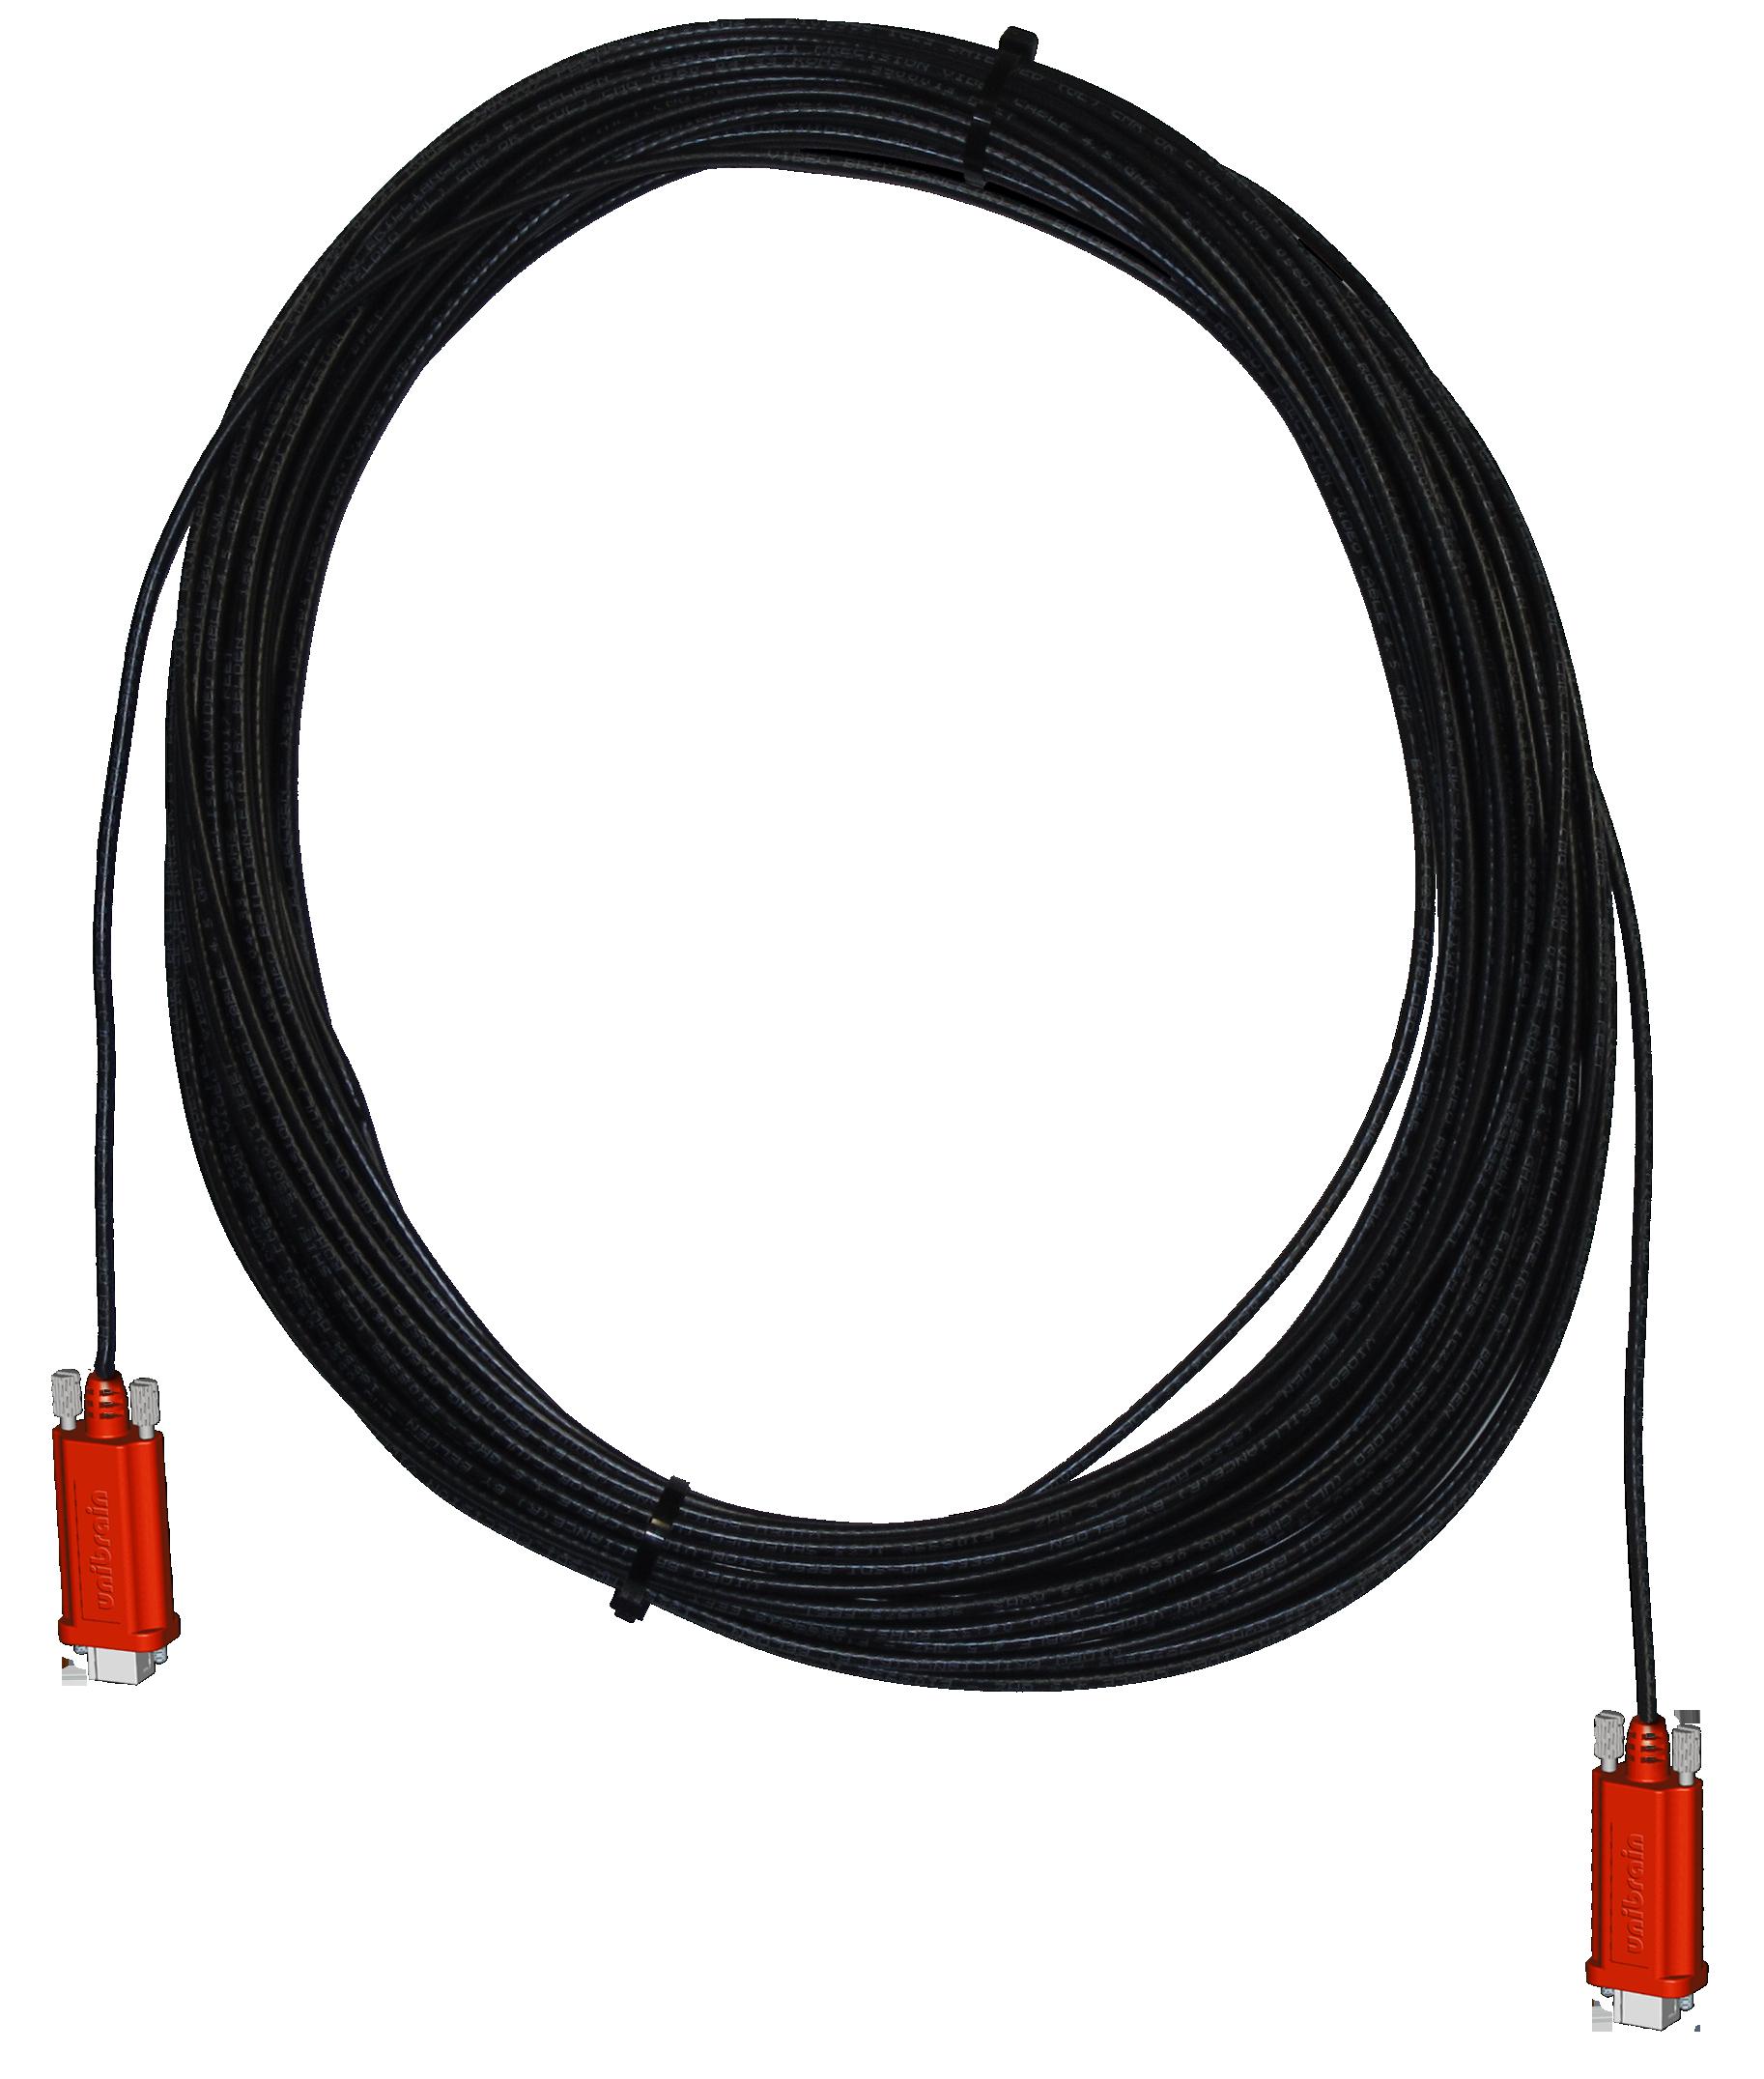 Unibrain 1394b Coaxial Cable